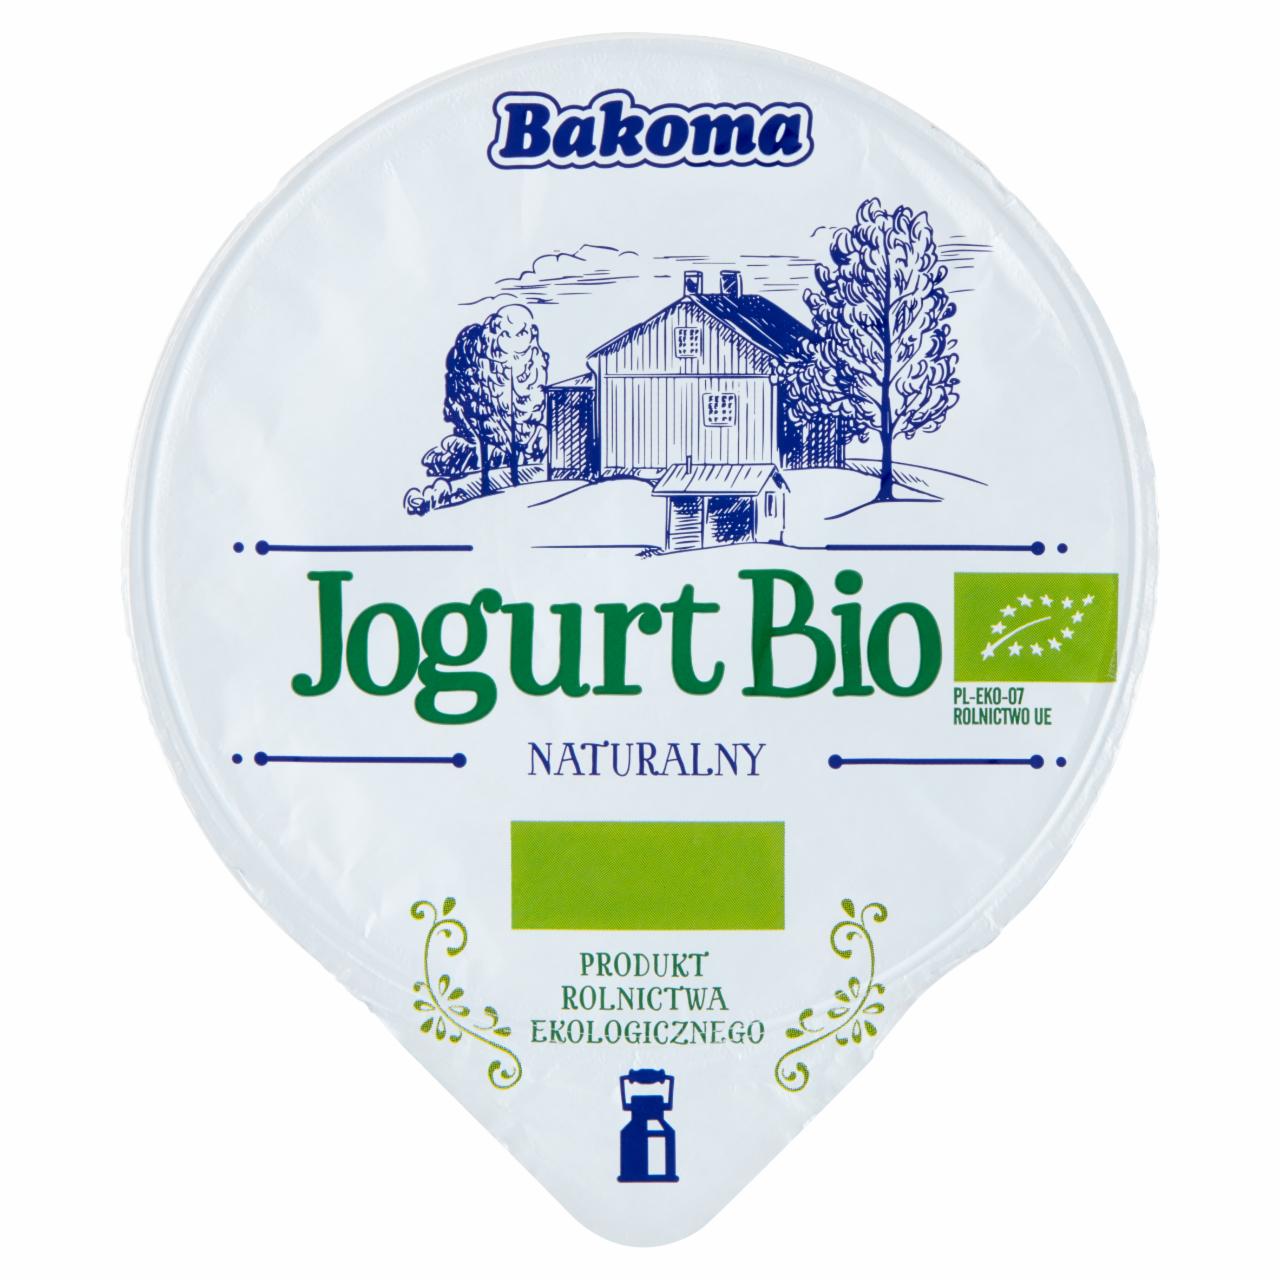 Zdjęcia - Bakoma Jogurt Bio naturalny 280 g